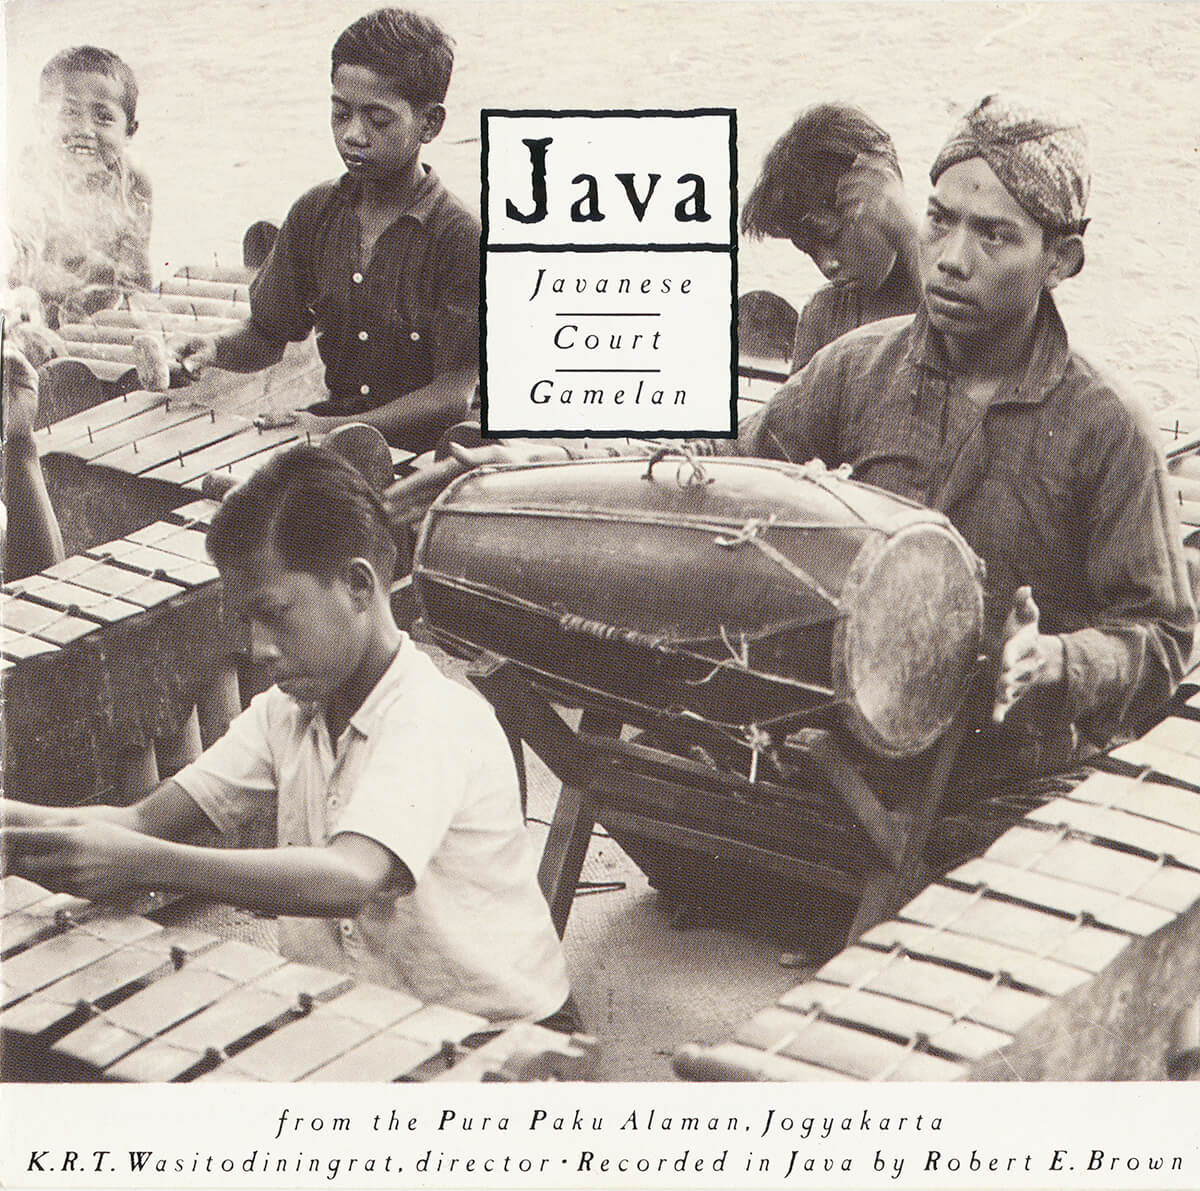 javanese-court-gamelan-cover_1200